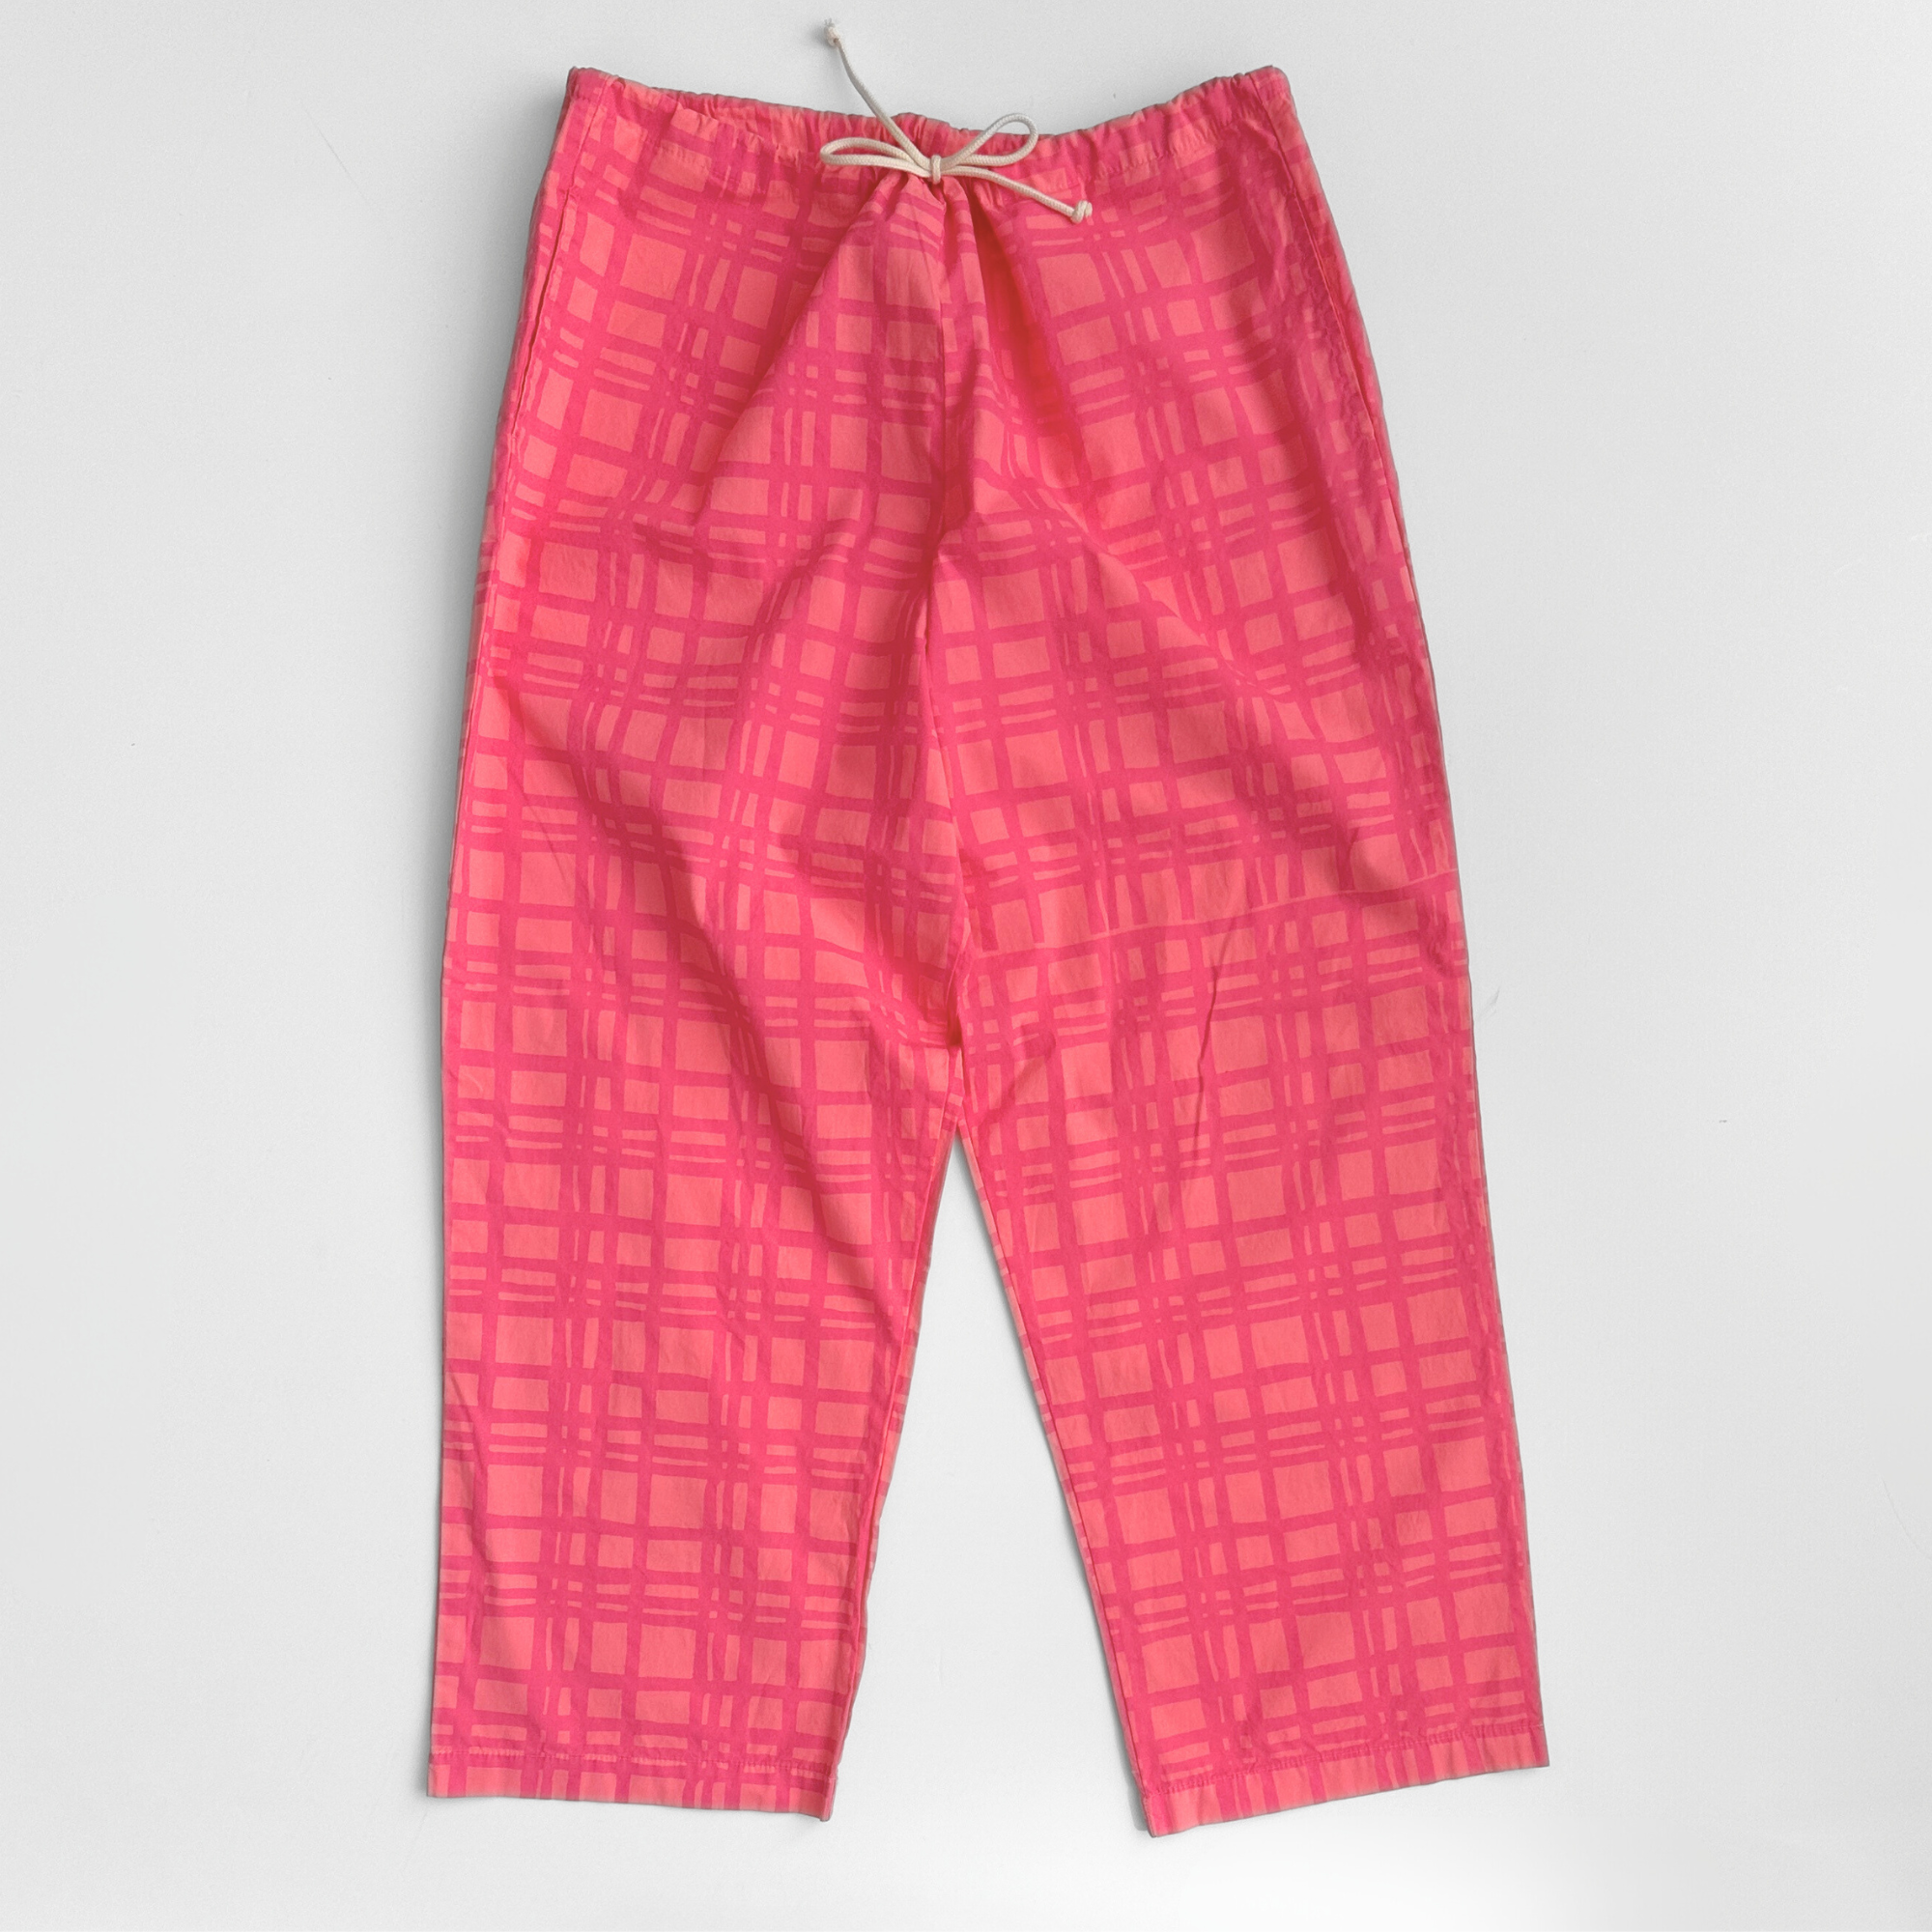 Cotton Poplin Pants - Darby - Pink Frosting